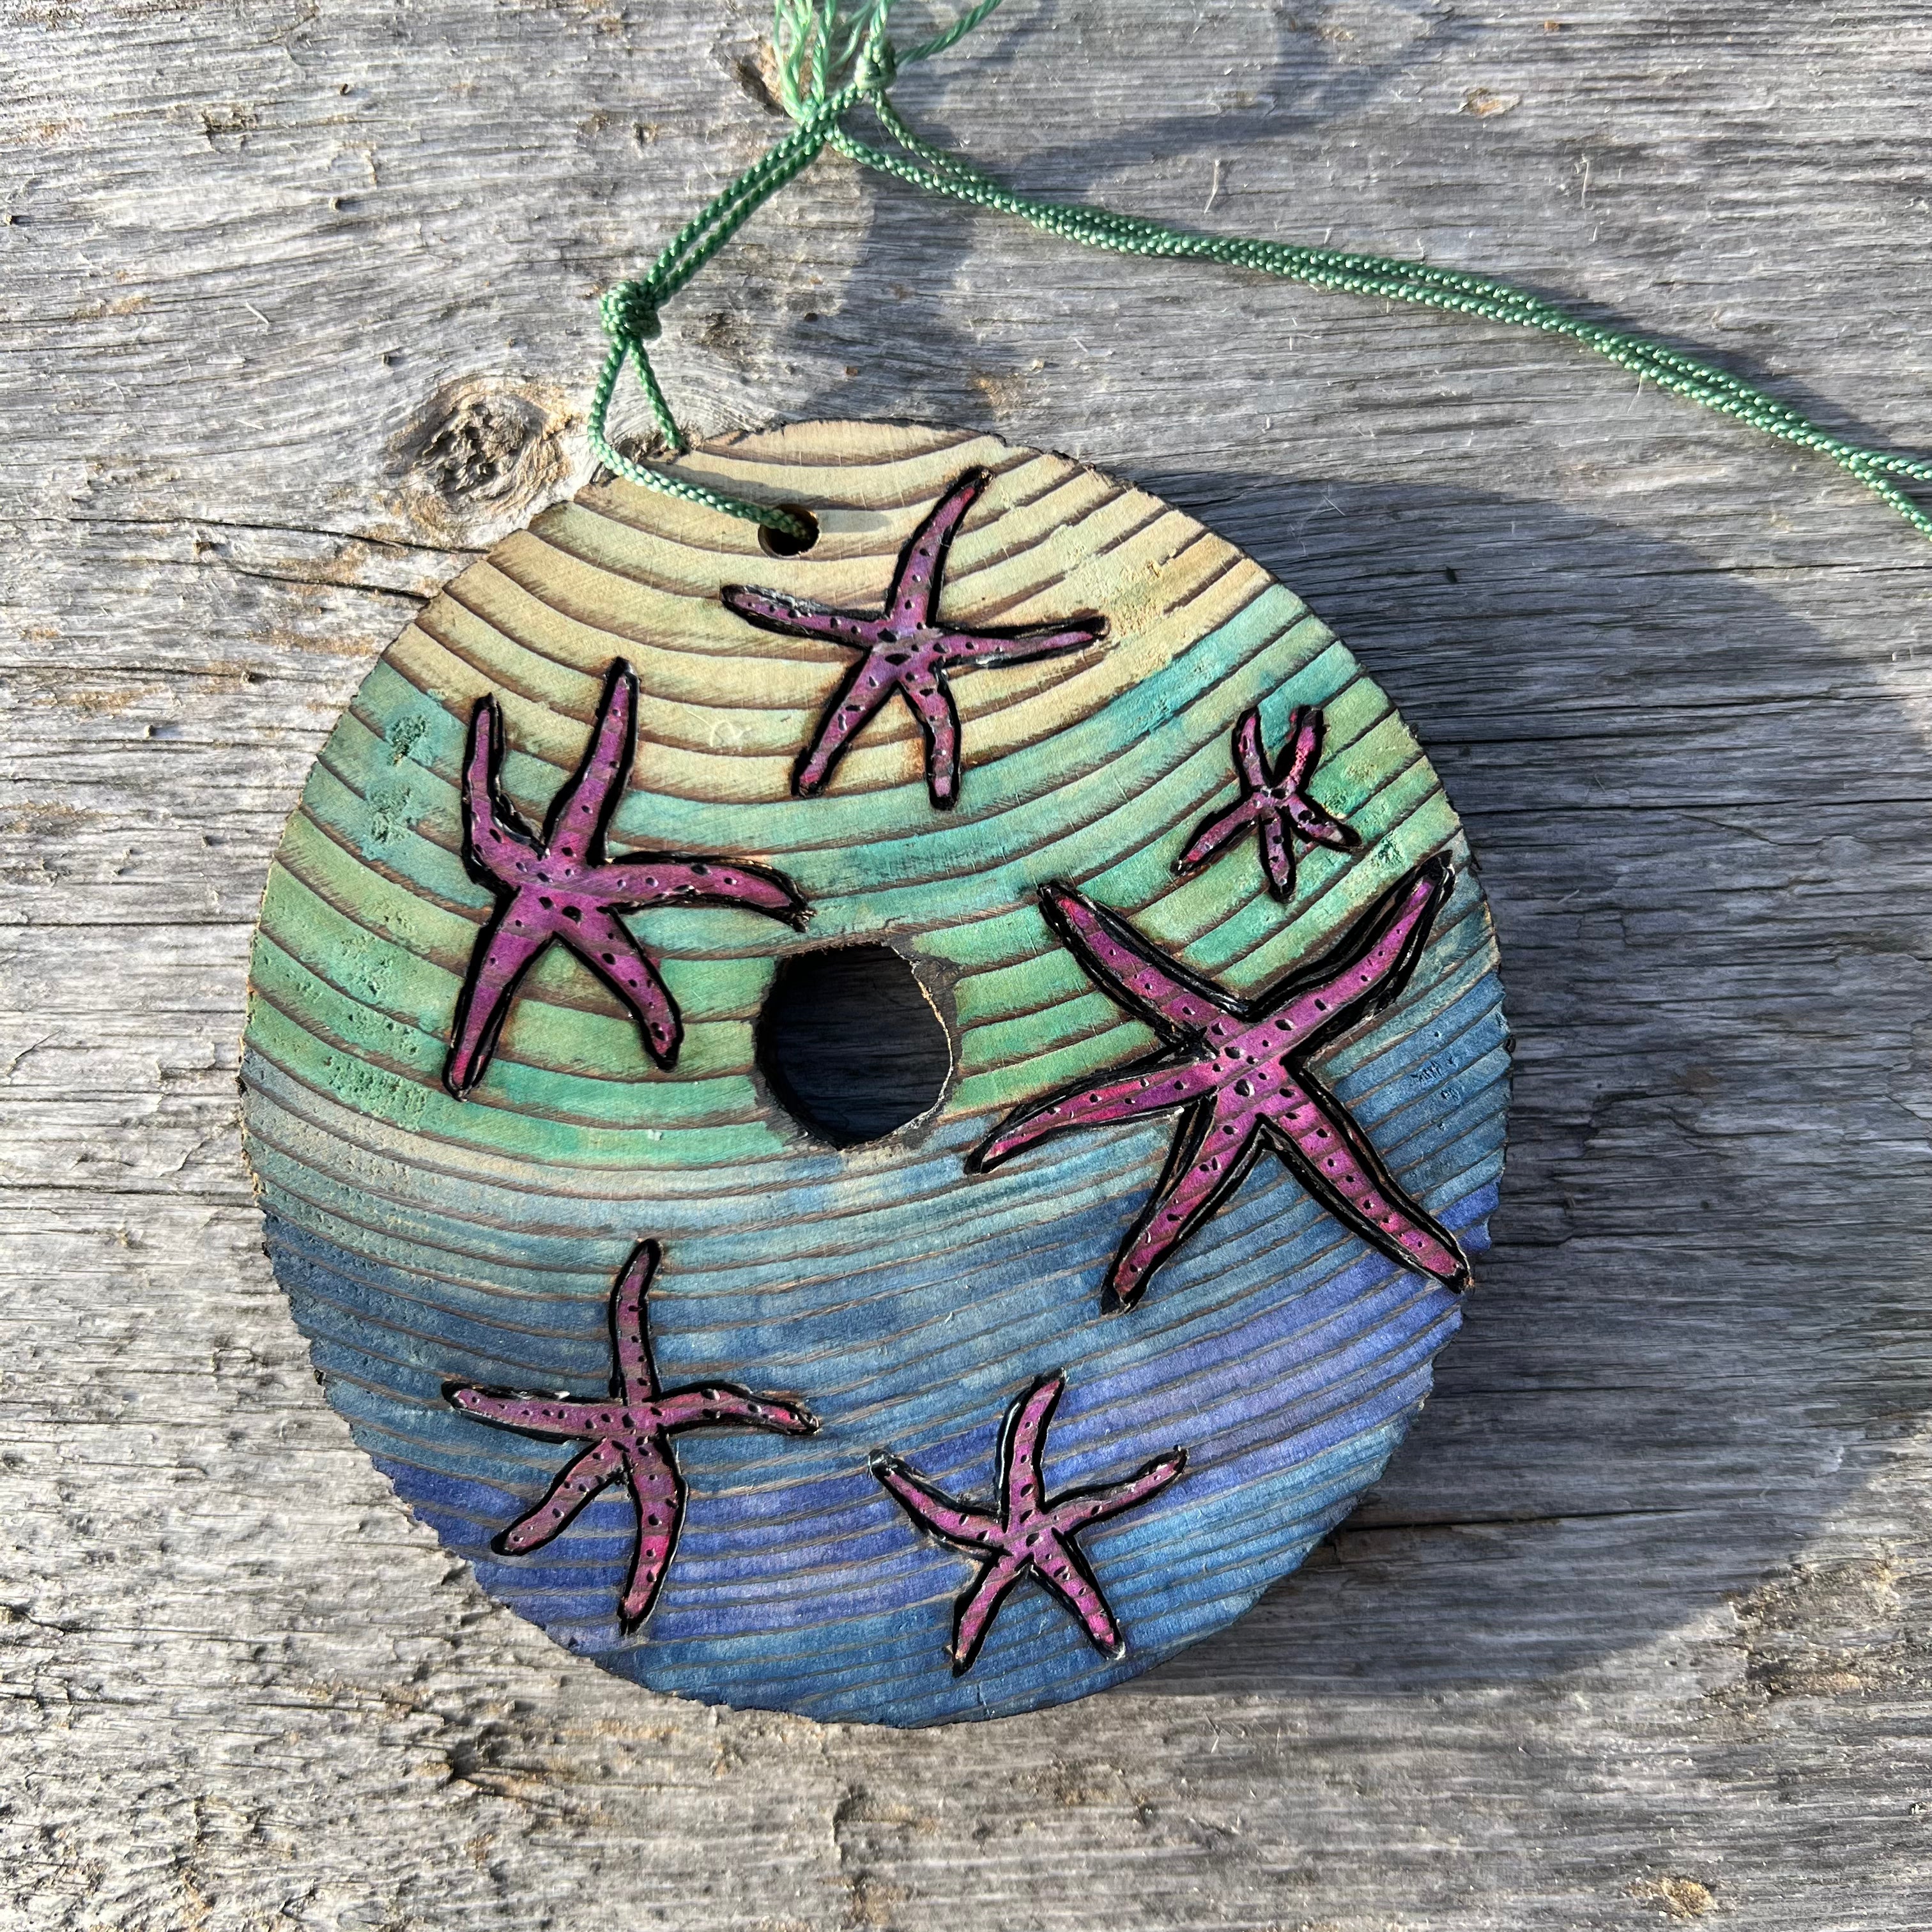 Authentic 50's era Cedar Fishing Cork Ornaments - wildlgs